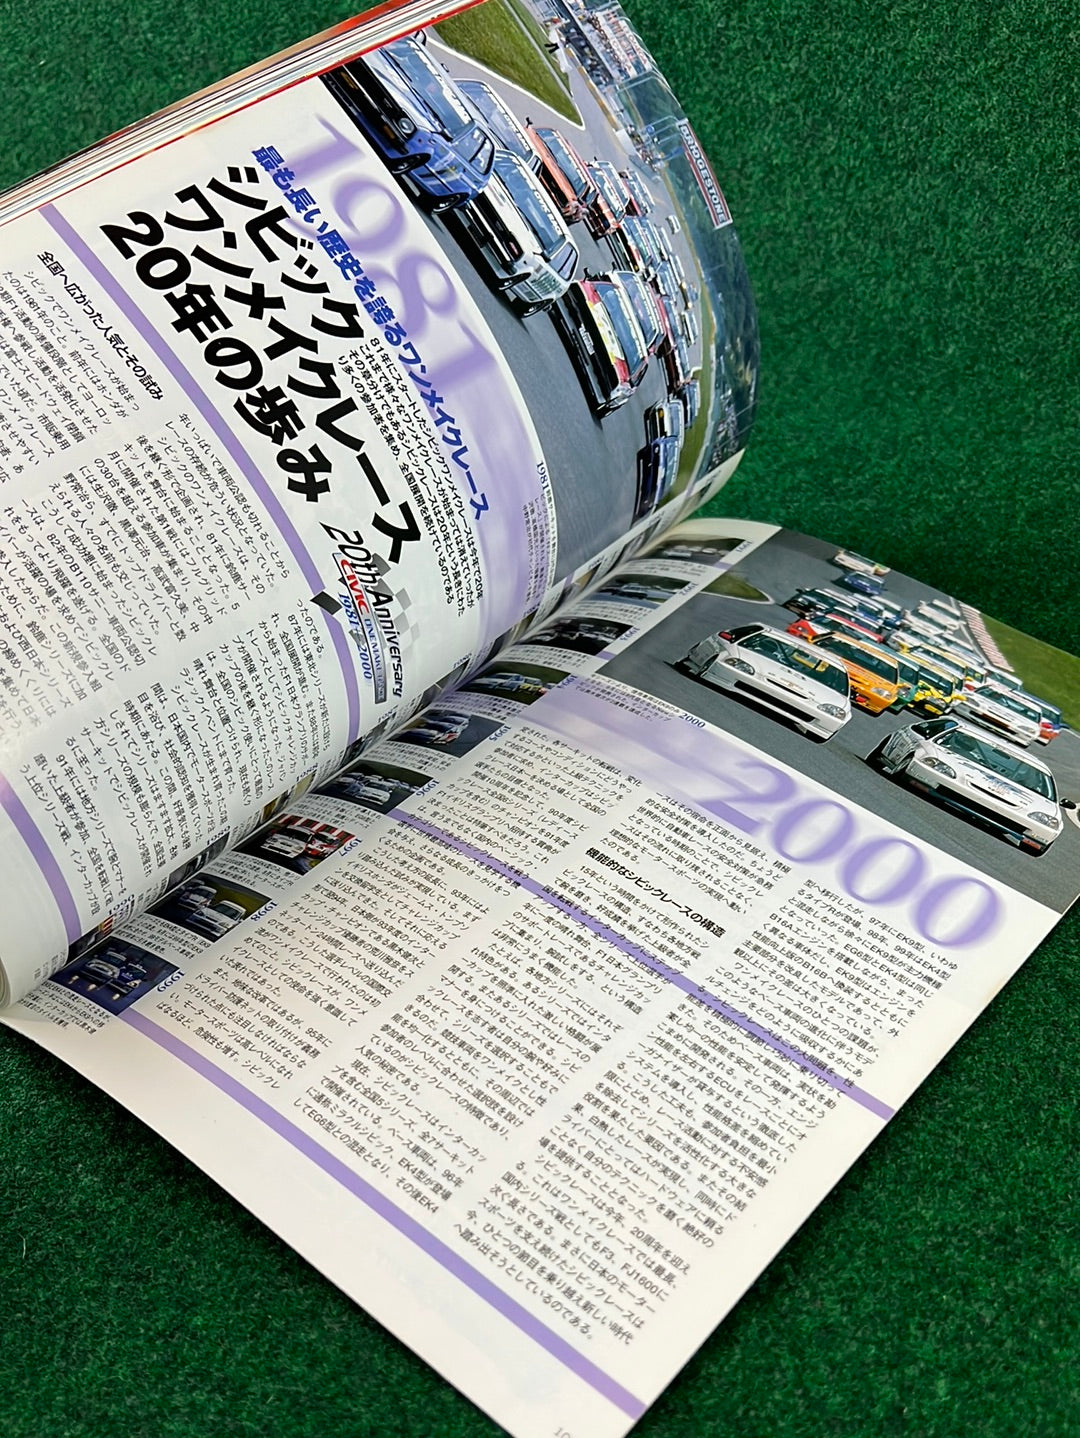 F1 - Fuji Television Japanese Grand Prix 2000 Race Program